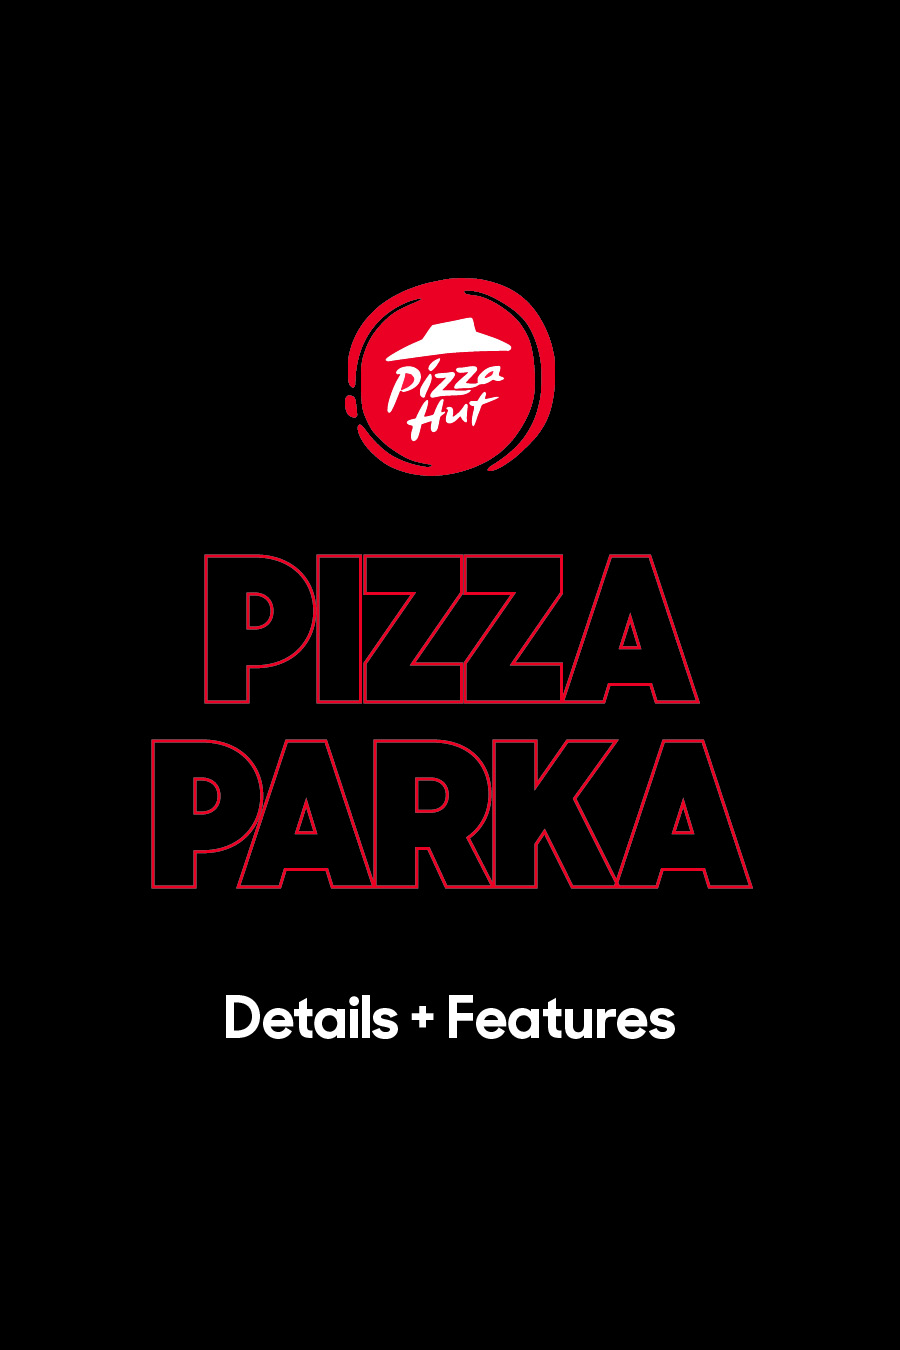 PH_PizzaParka_3x4.5_hang_tag_vF14.jpg